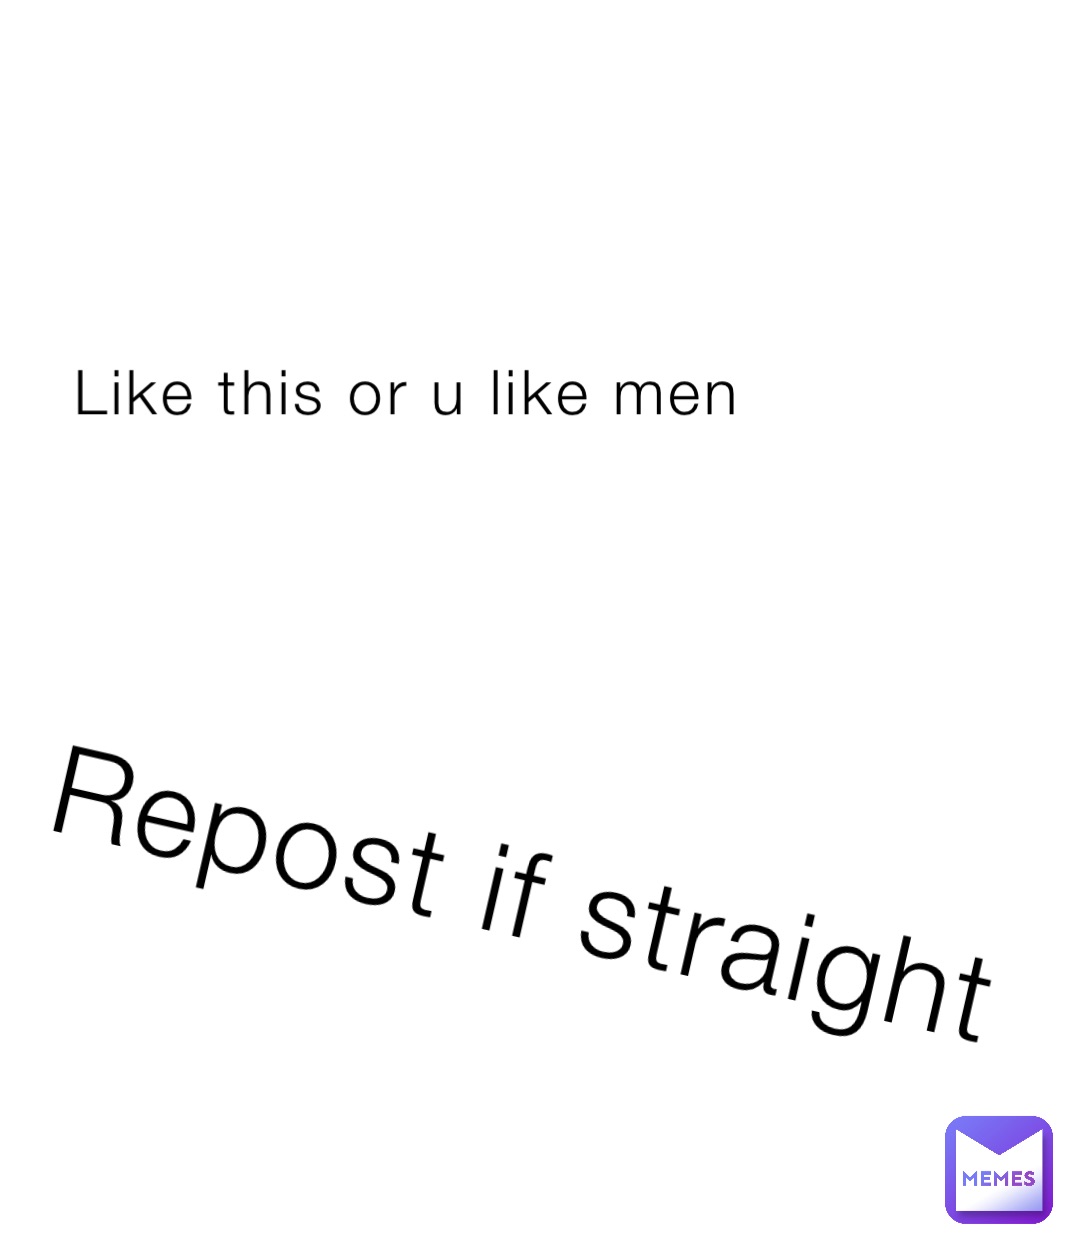 Like this or u like men Repost if straight